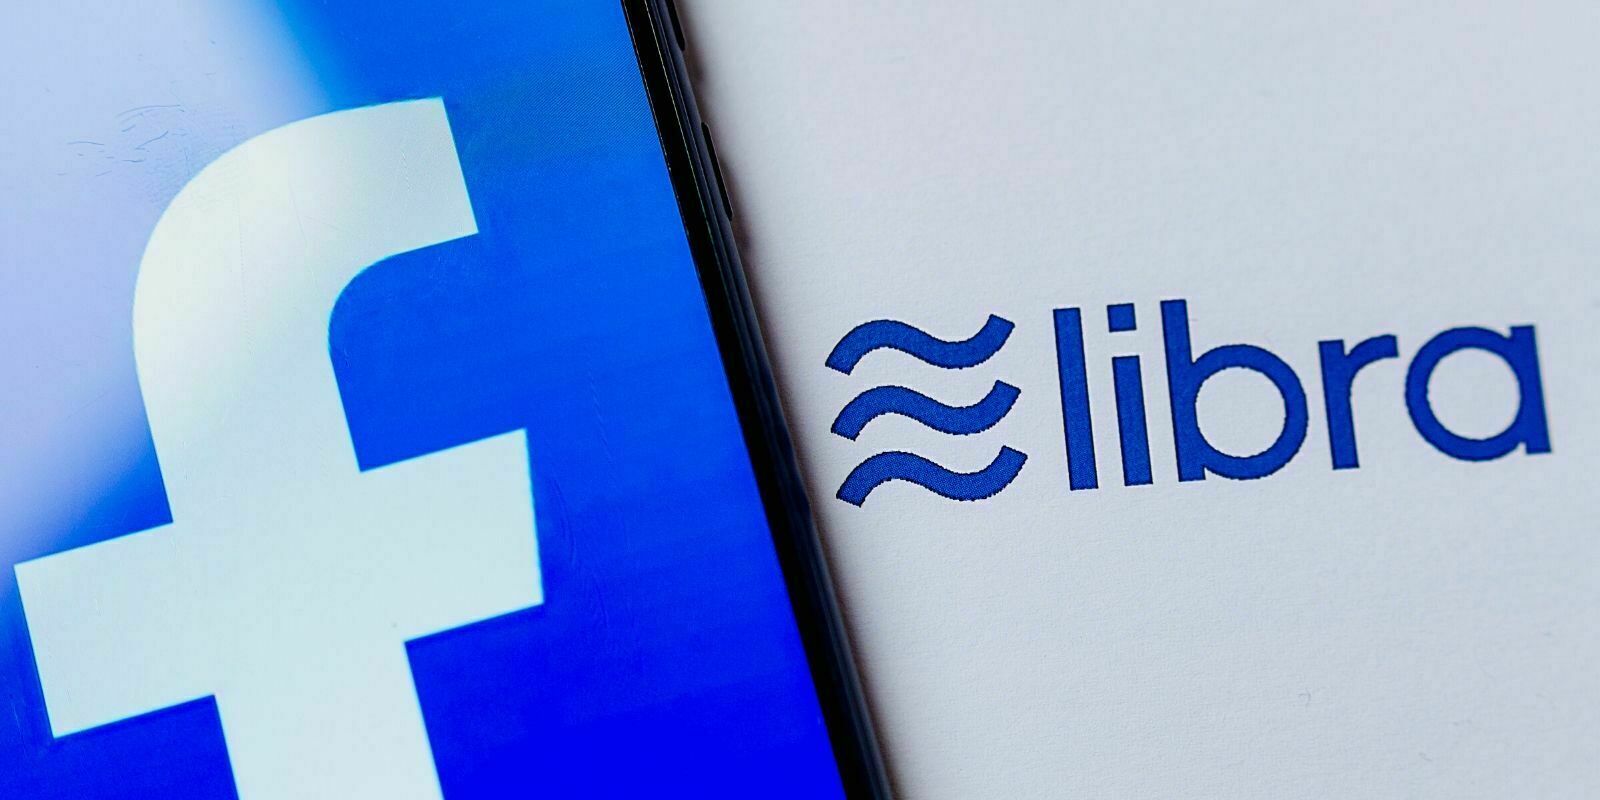 Libra augmentera les revenus publicitaires de Facebook, selon Zuckerberg